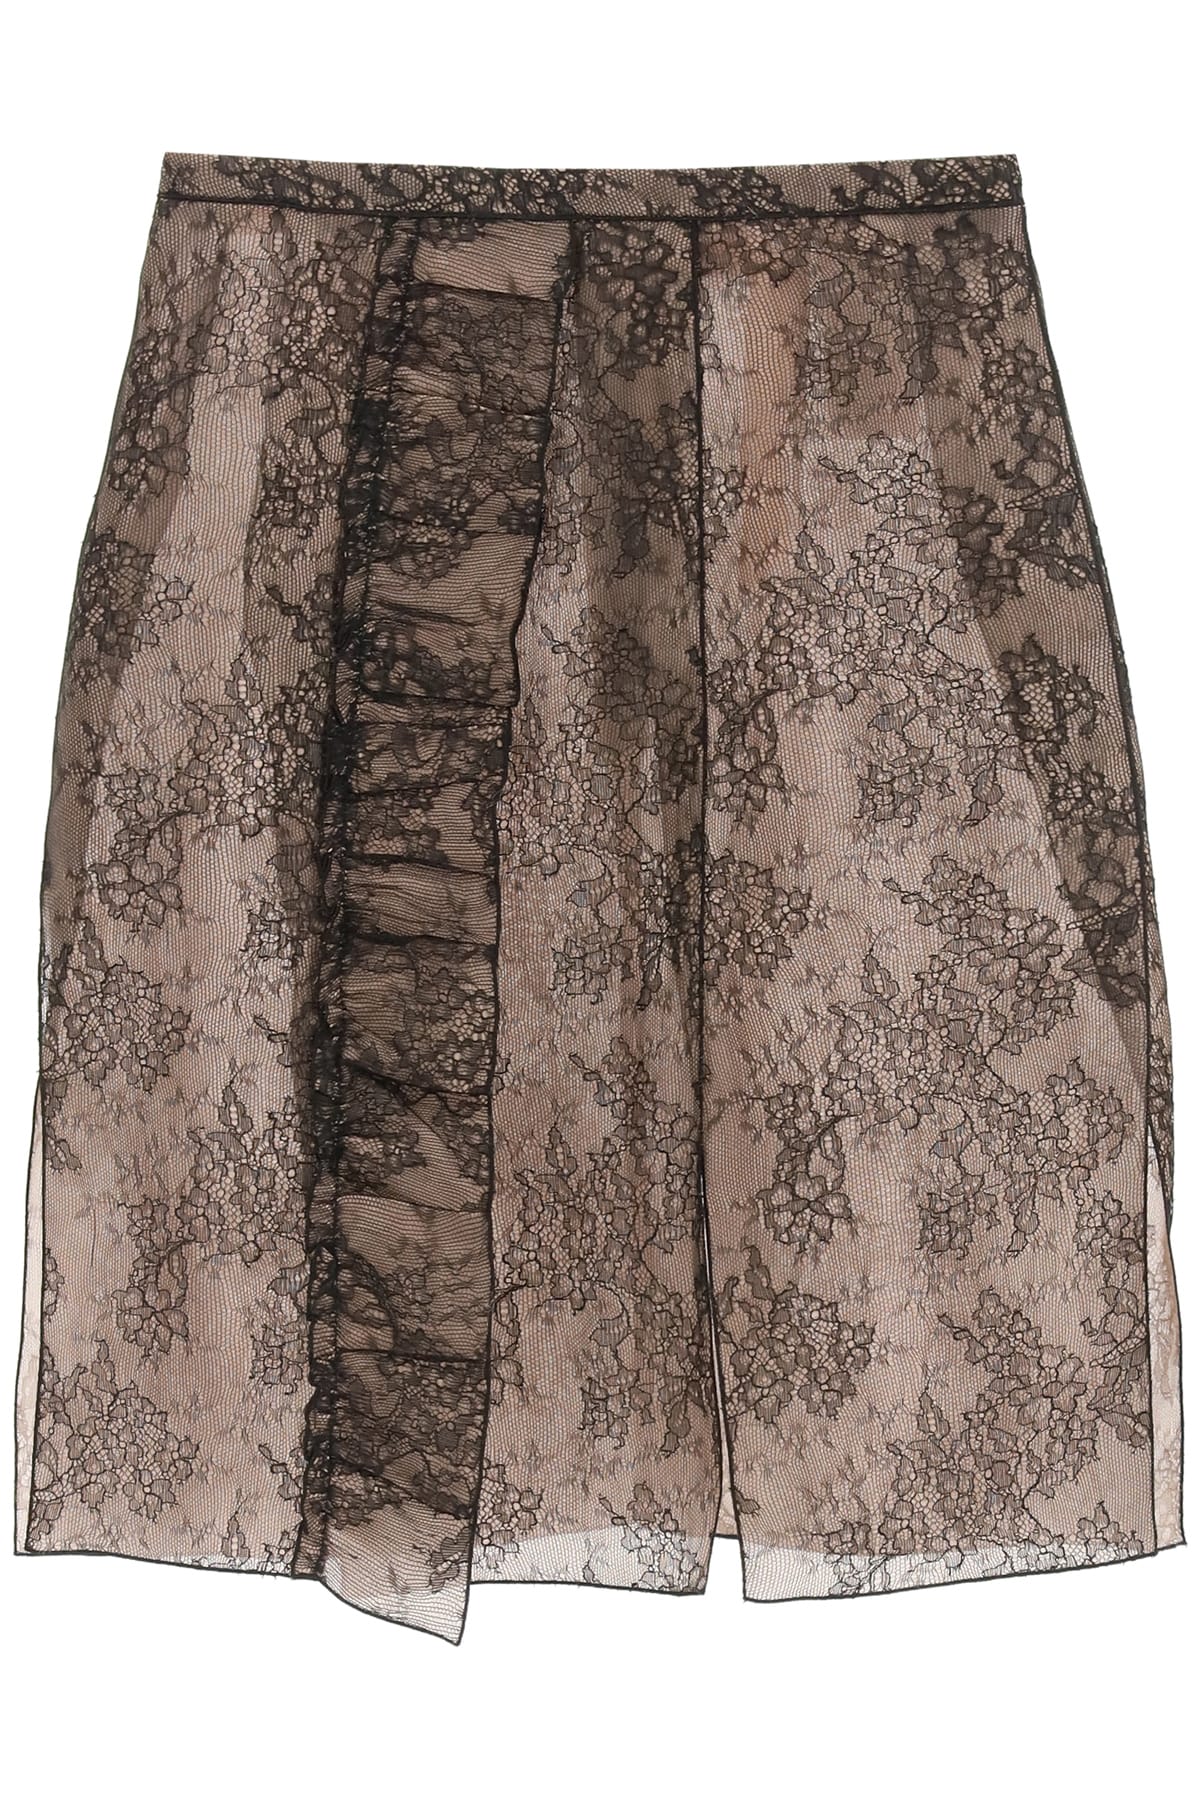 N.21 Lace Midi Skirt